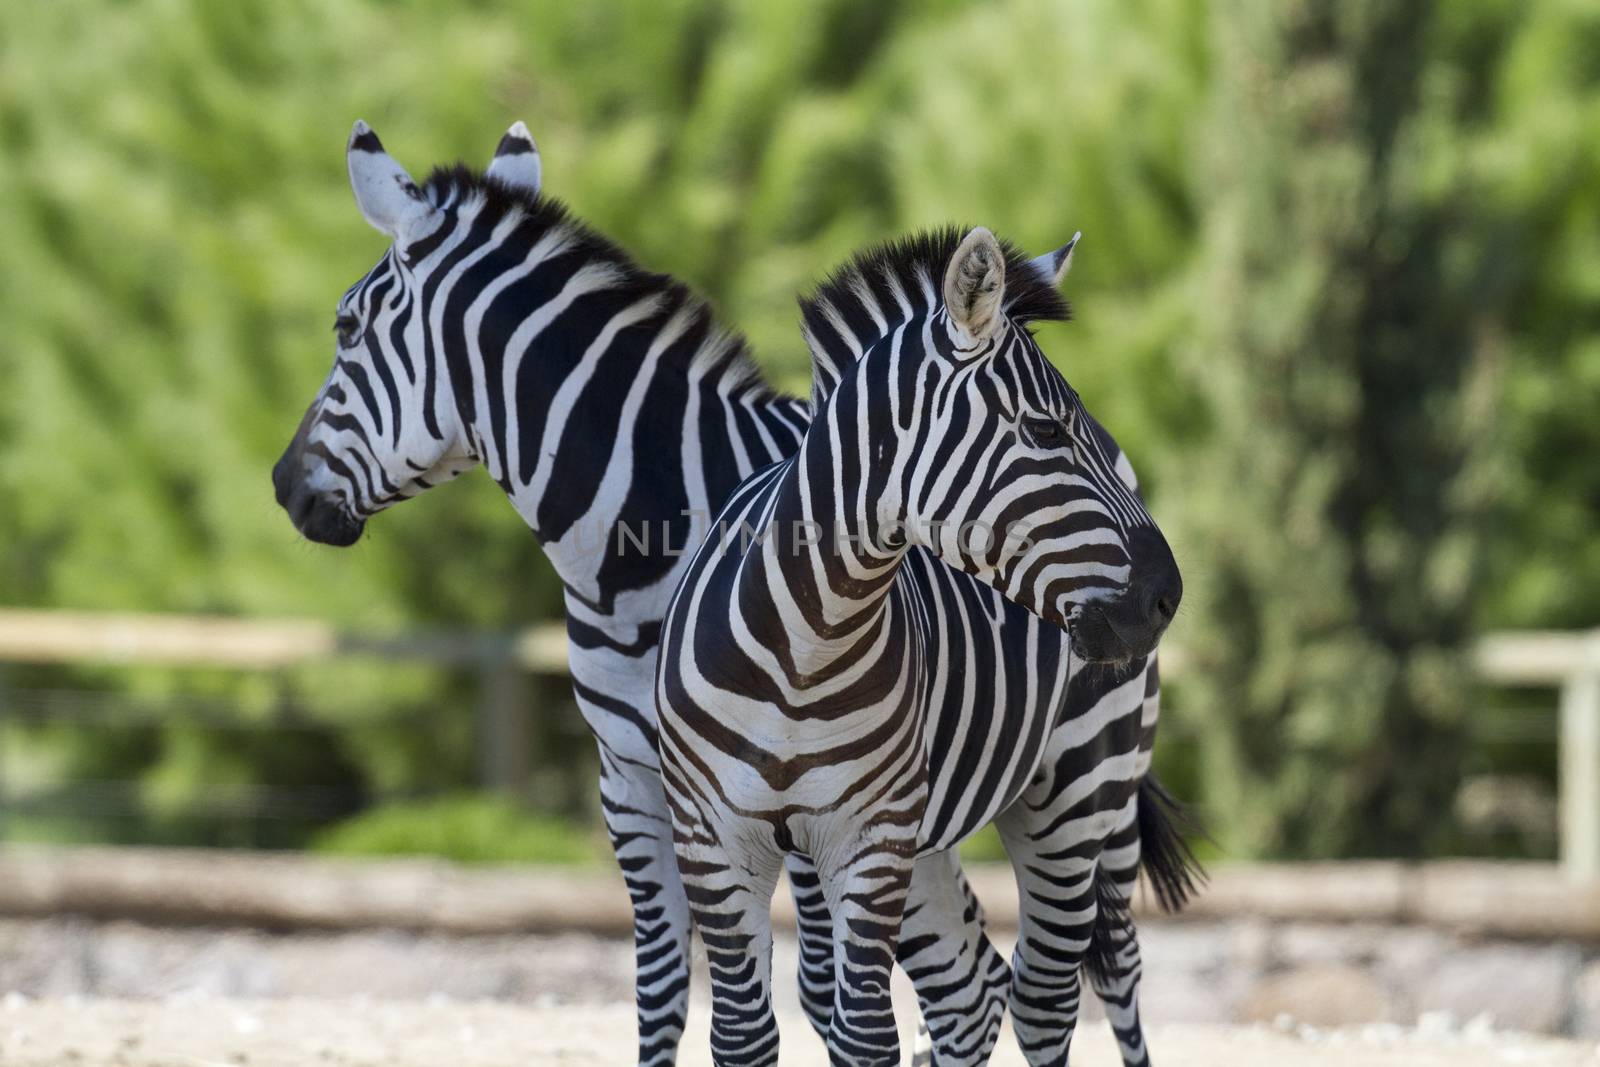 Zebras by ozkanzozmen